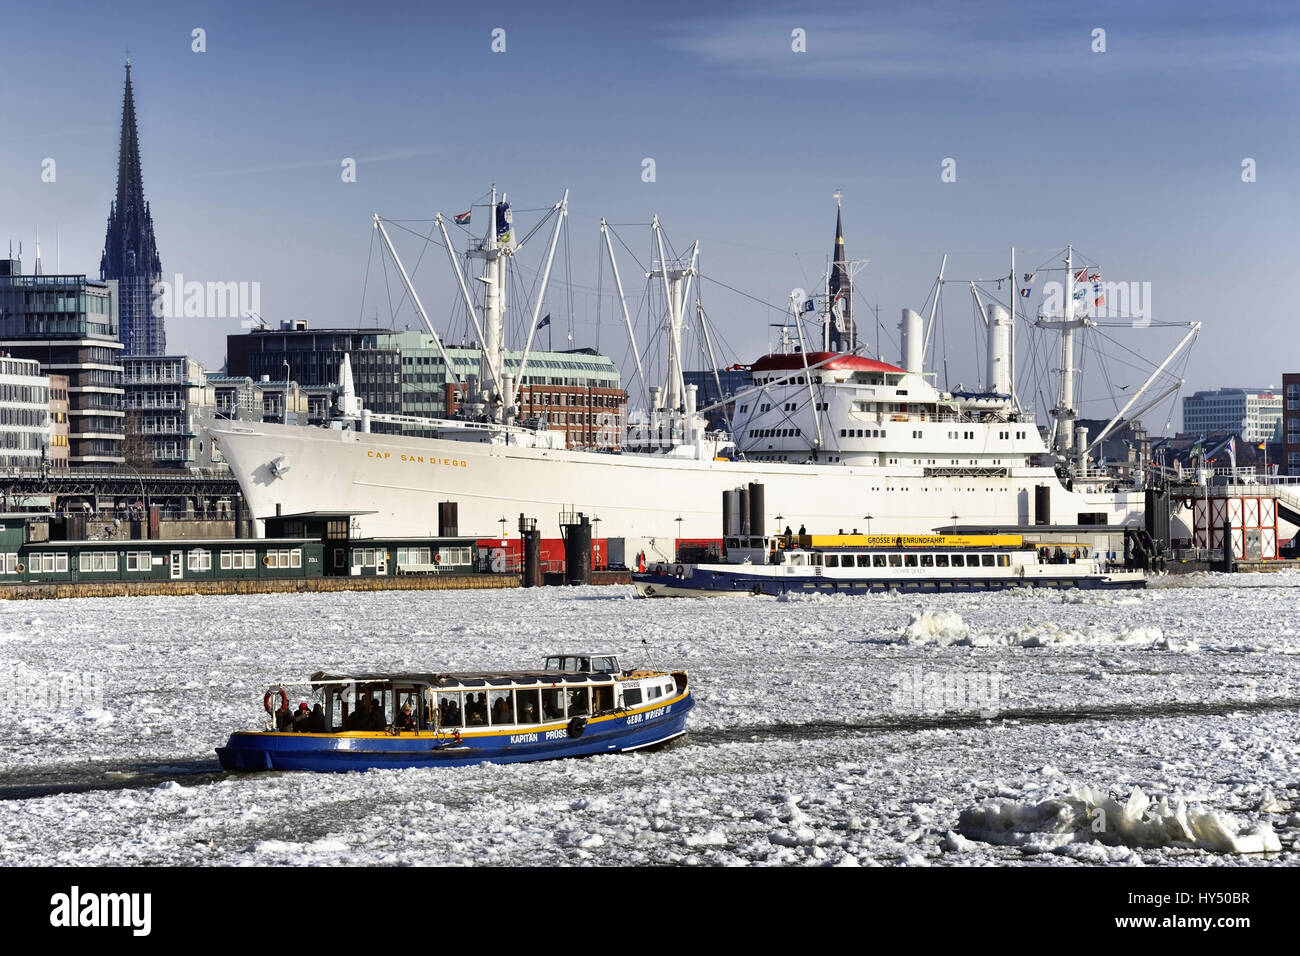 Longboat in invernale del porto di Amburgo, Germania, Europa Barkasse im winterlichen Hamburger Hafen, Deutschland, Europa Foto Stock